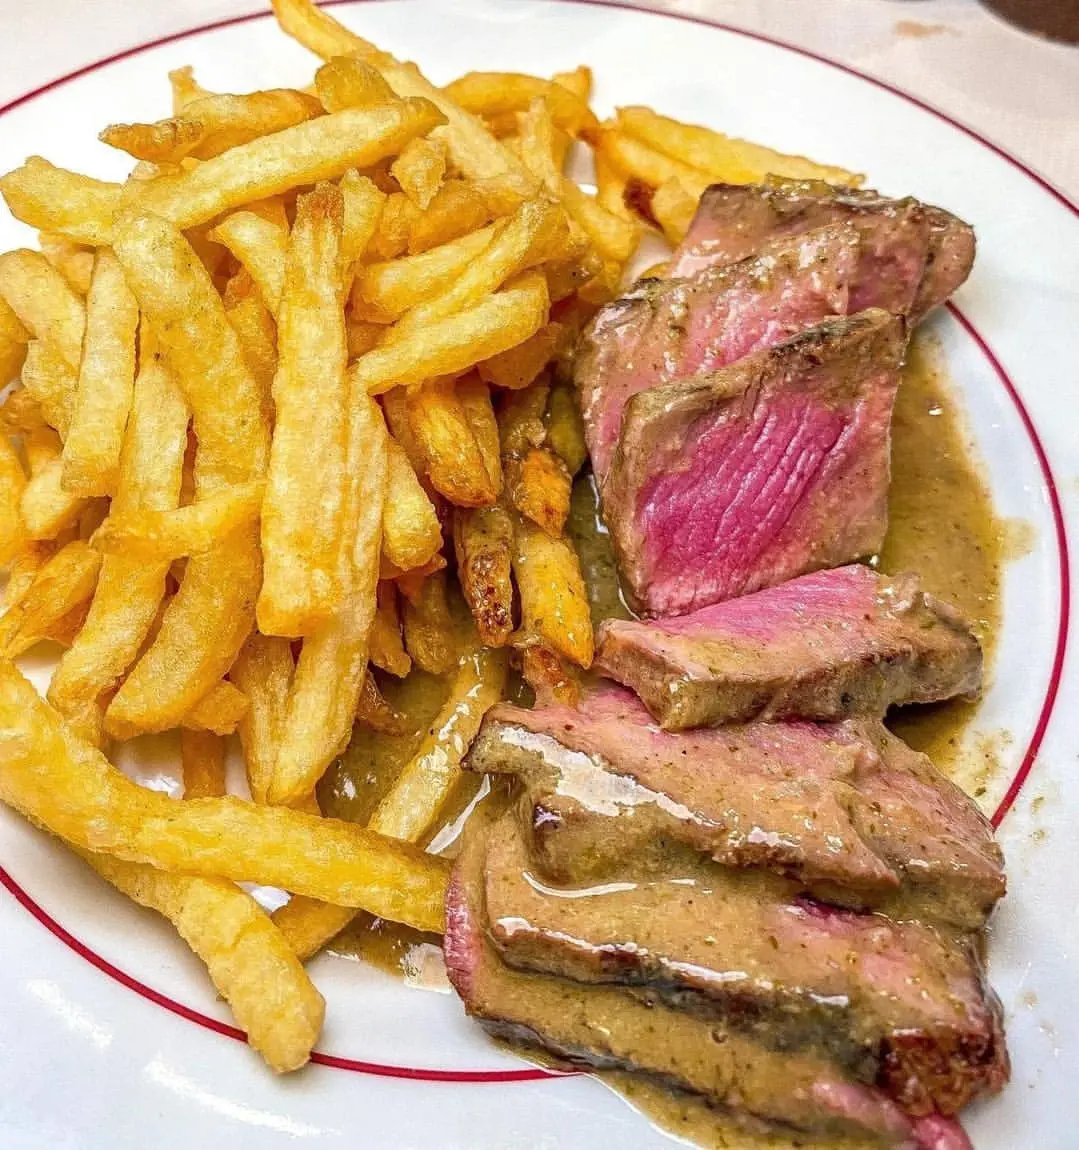 Steak & frites